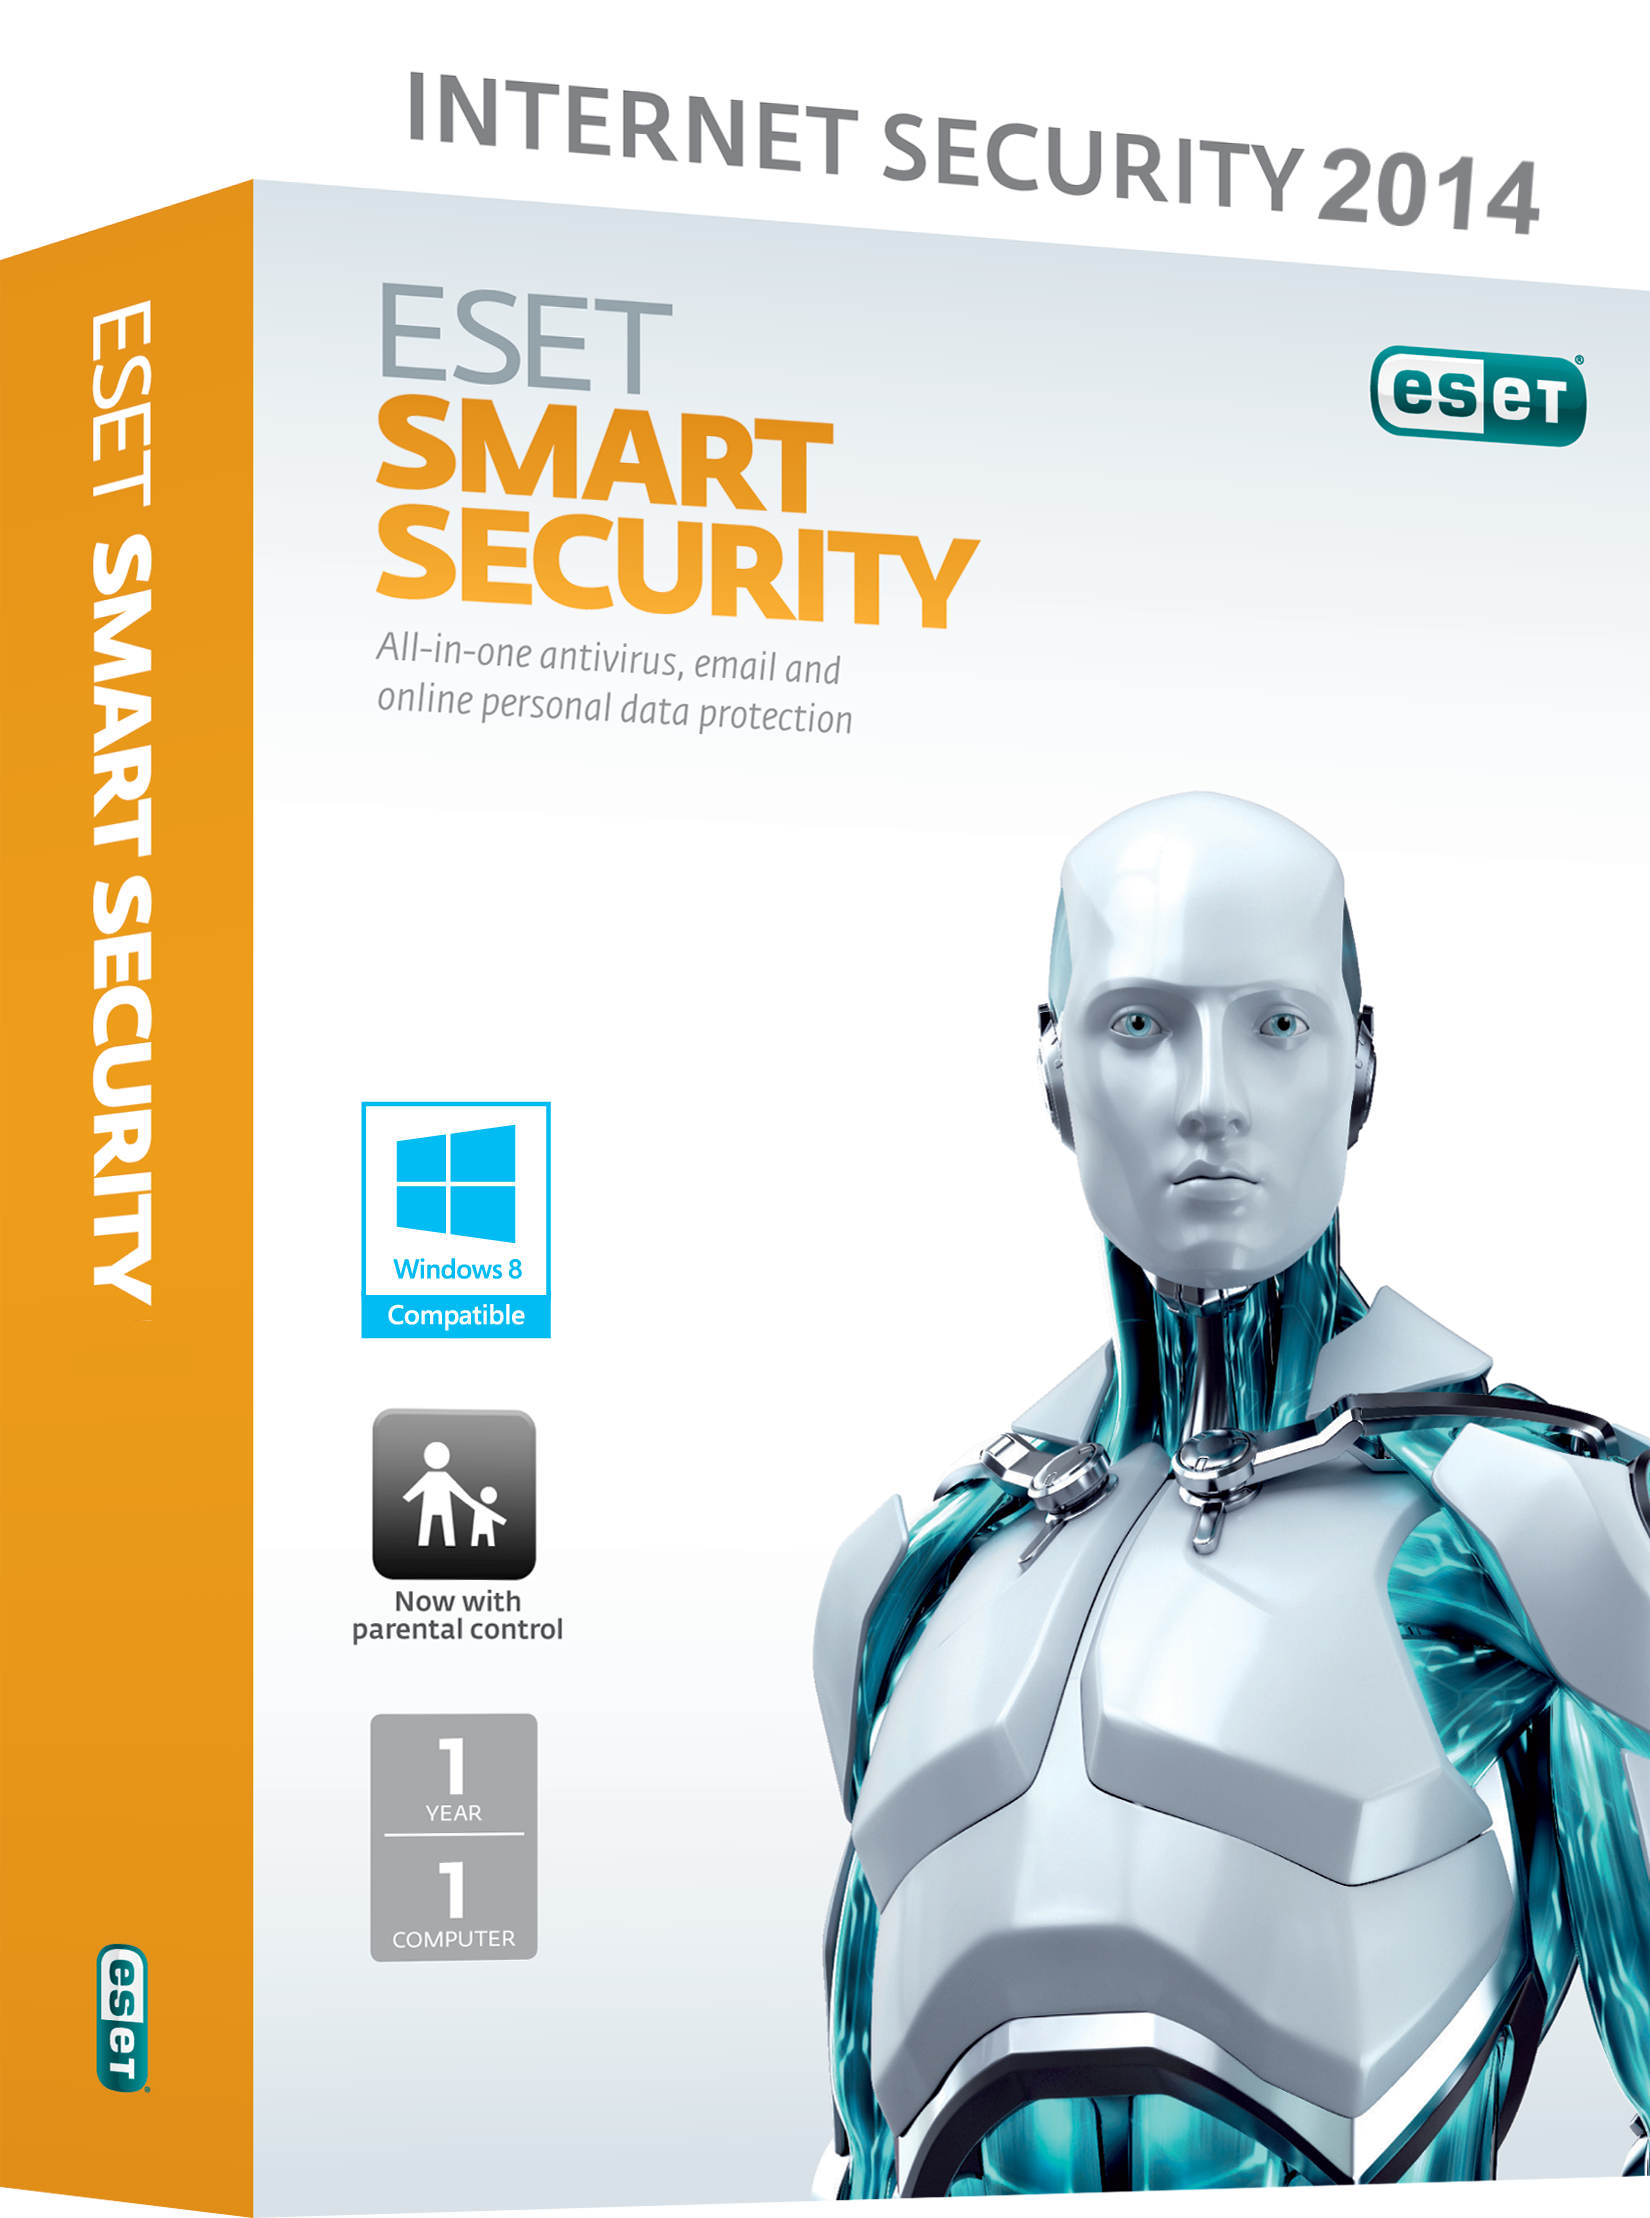 Eset smart security 8 activation key 2017